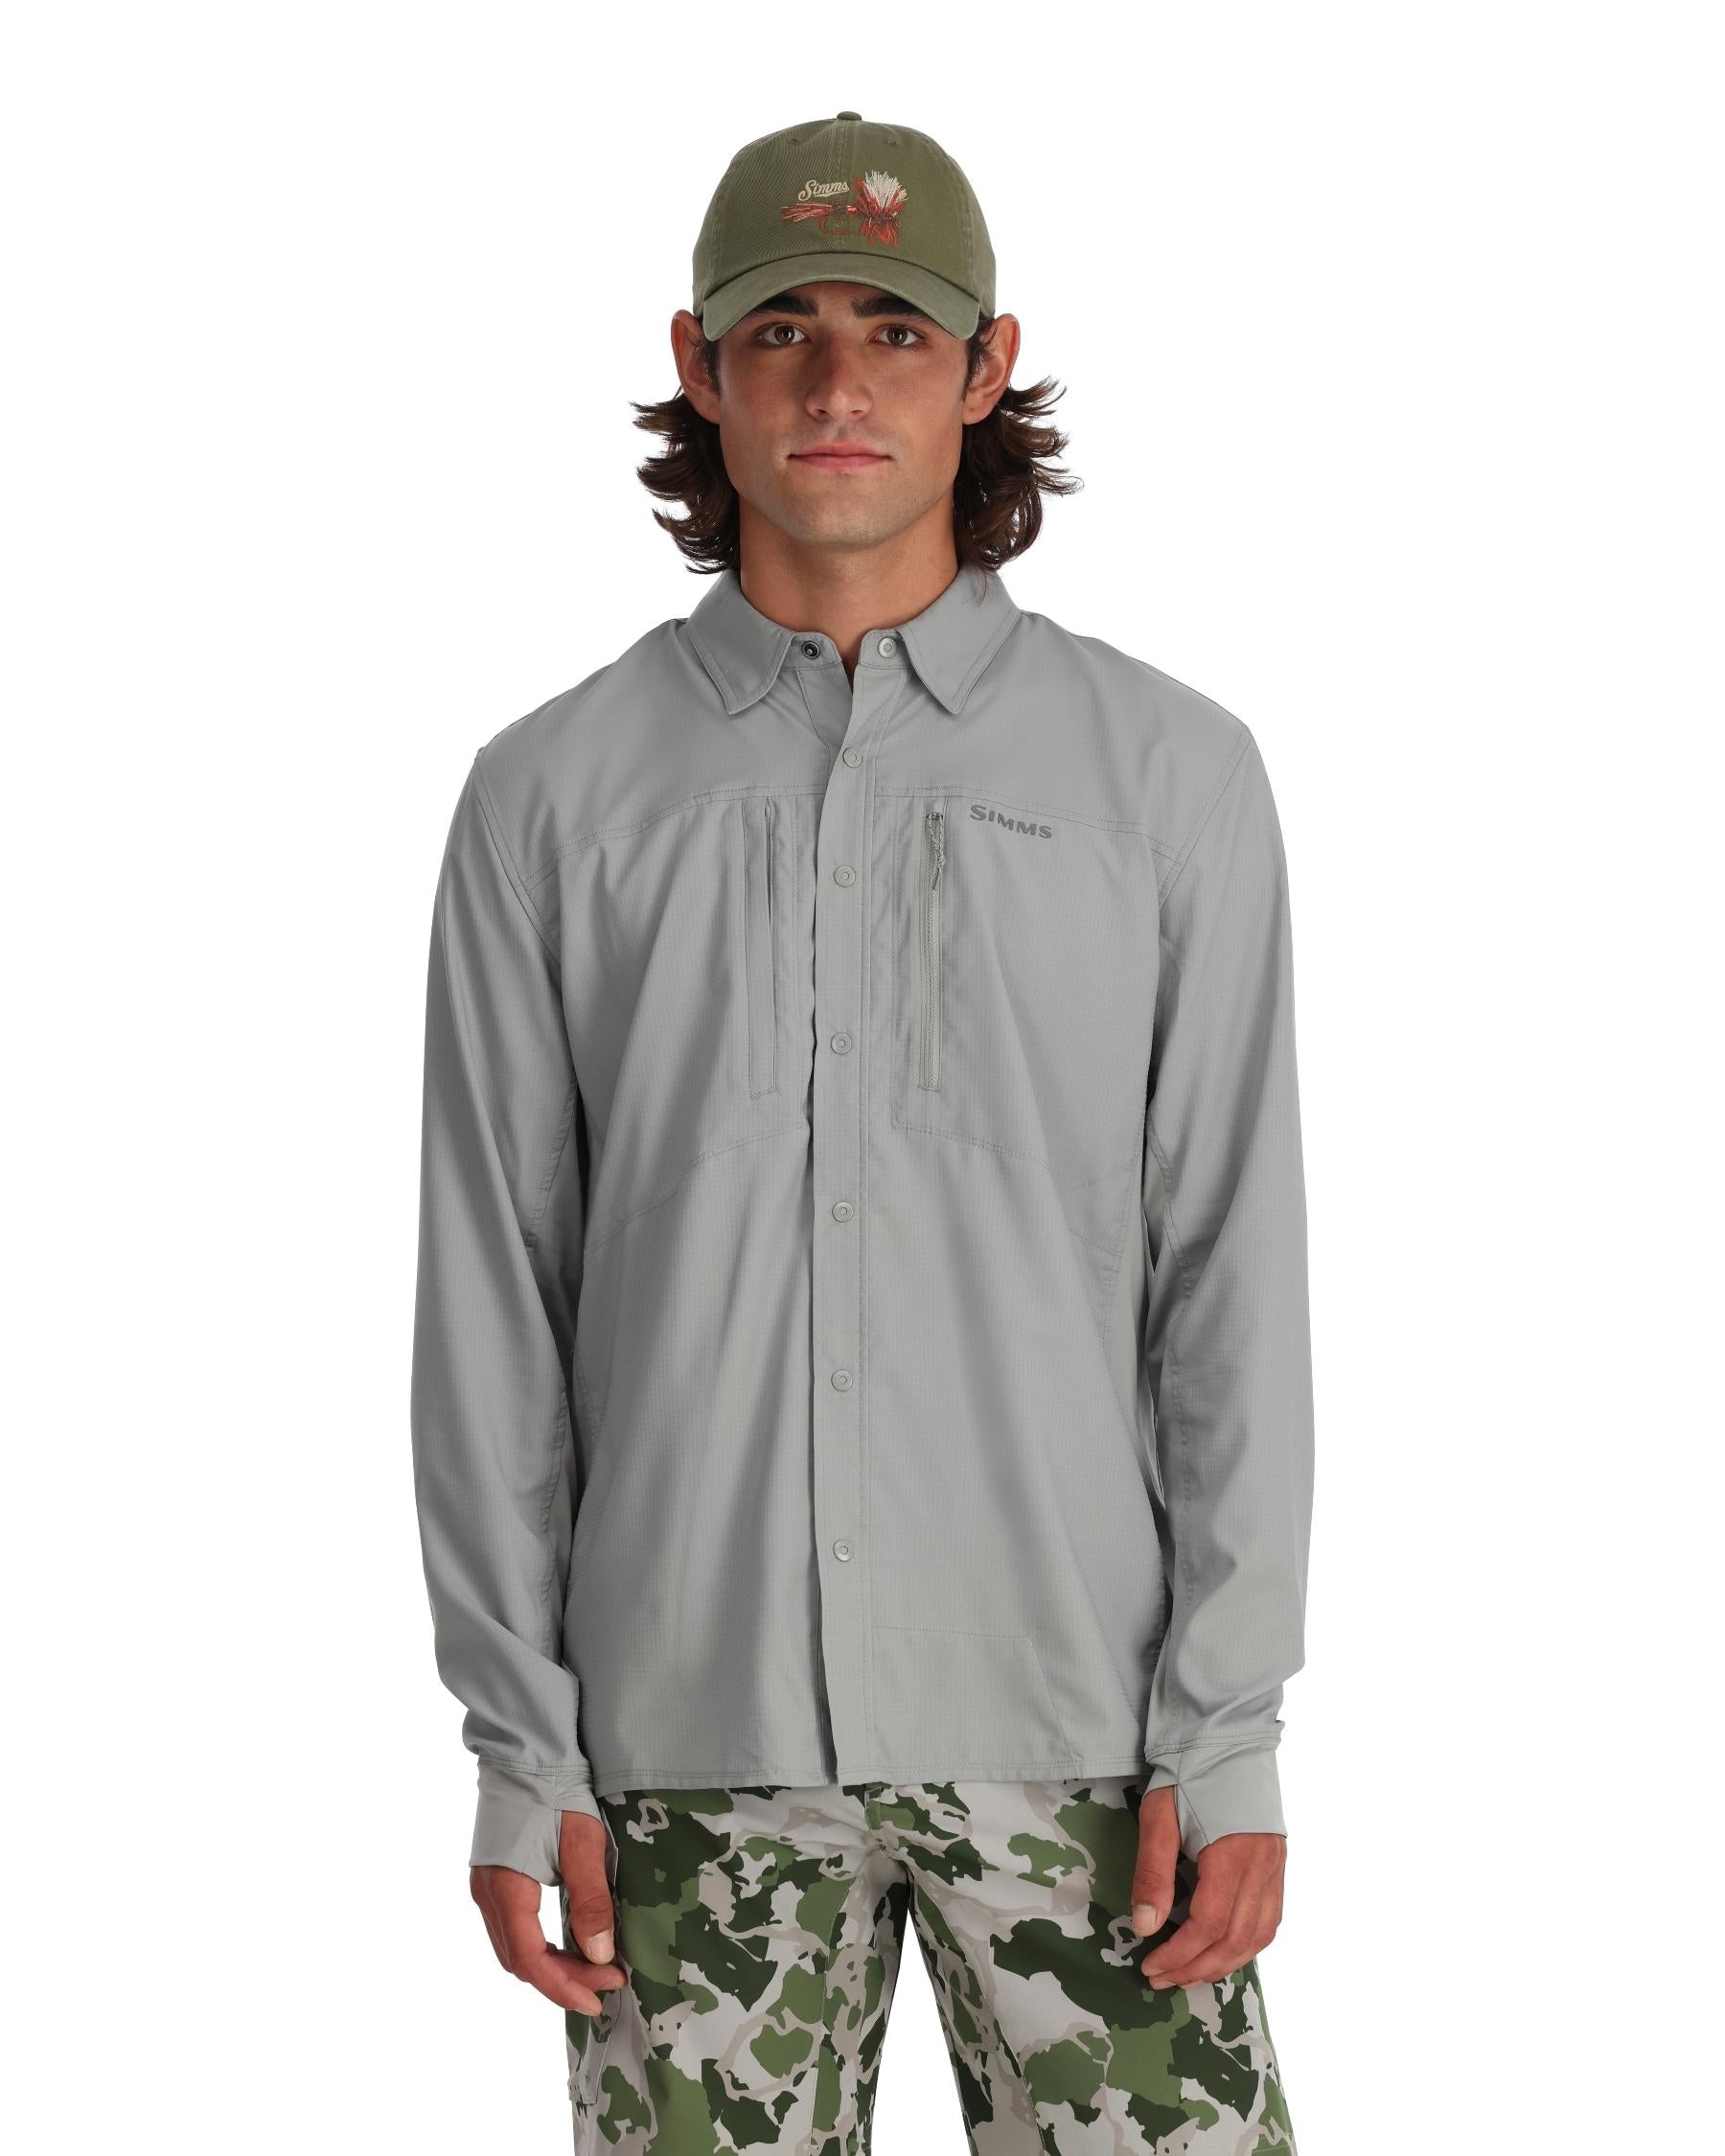 M's Intruder® BiComp Fishing Shirt